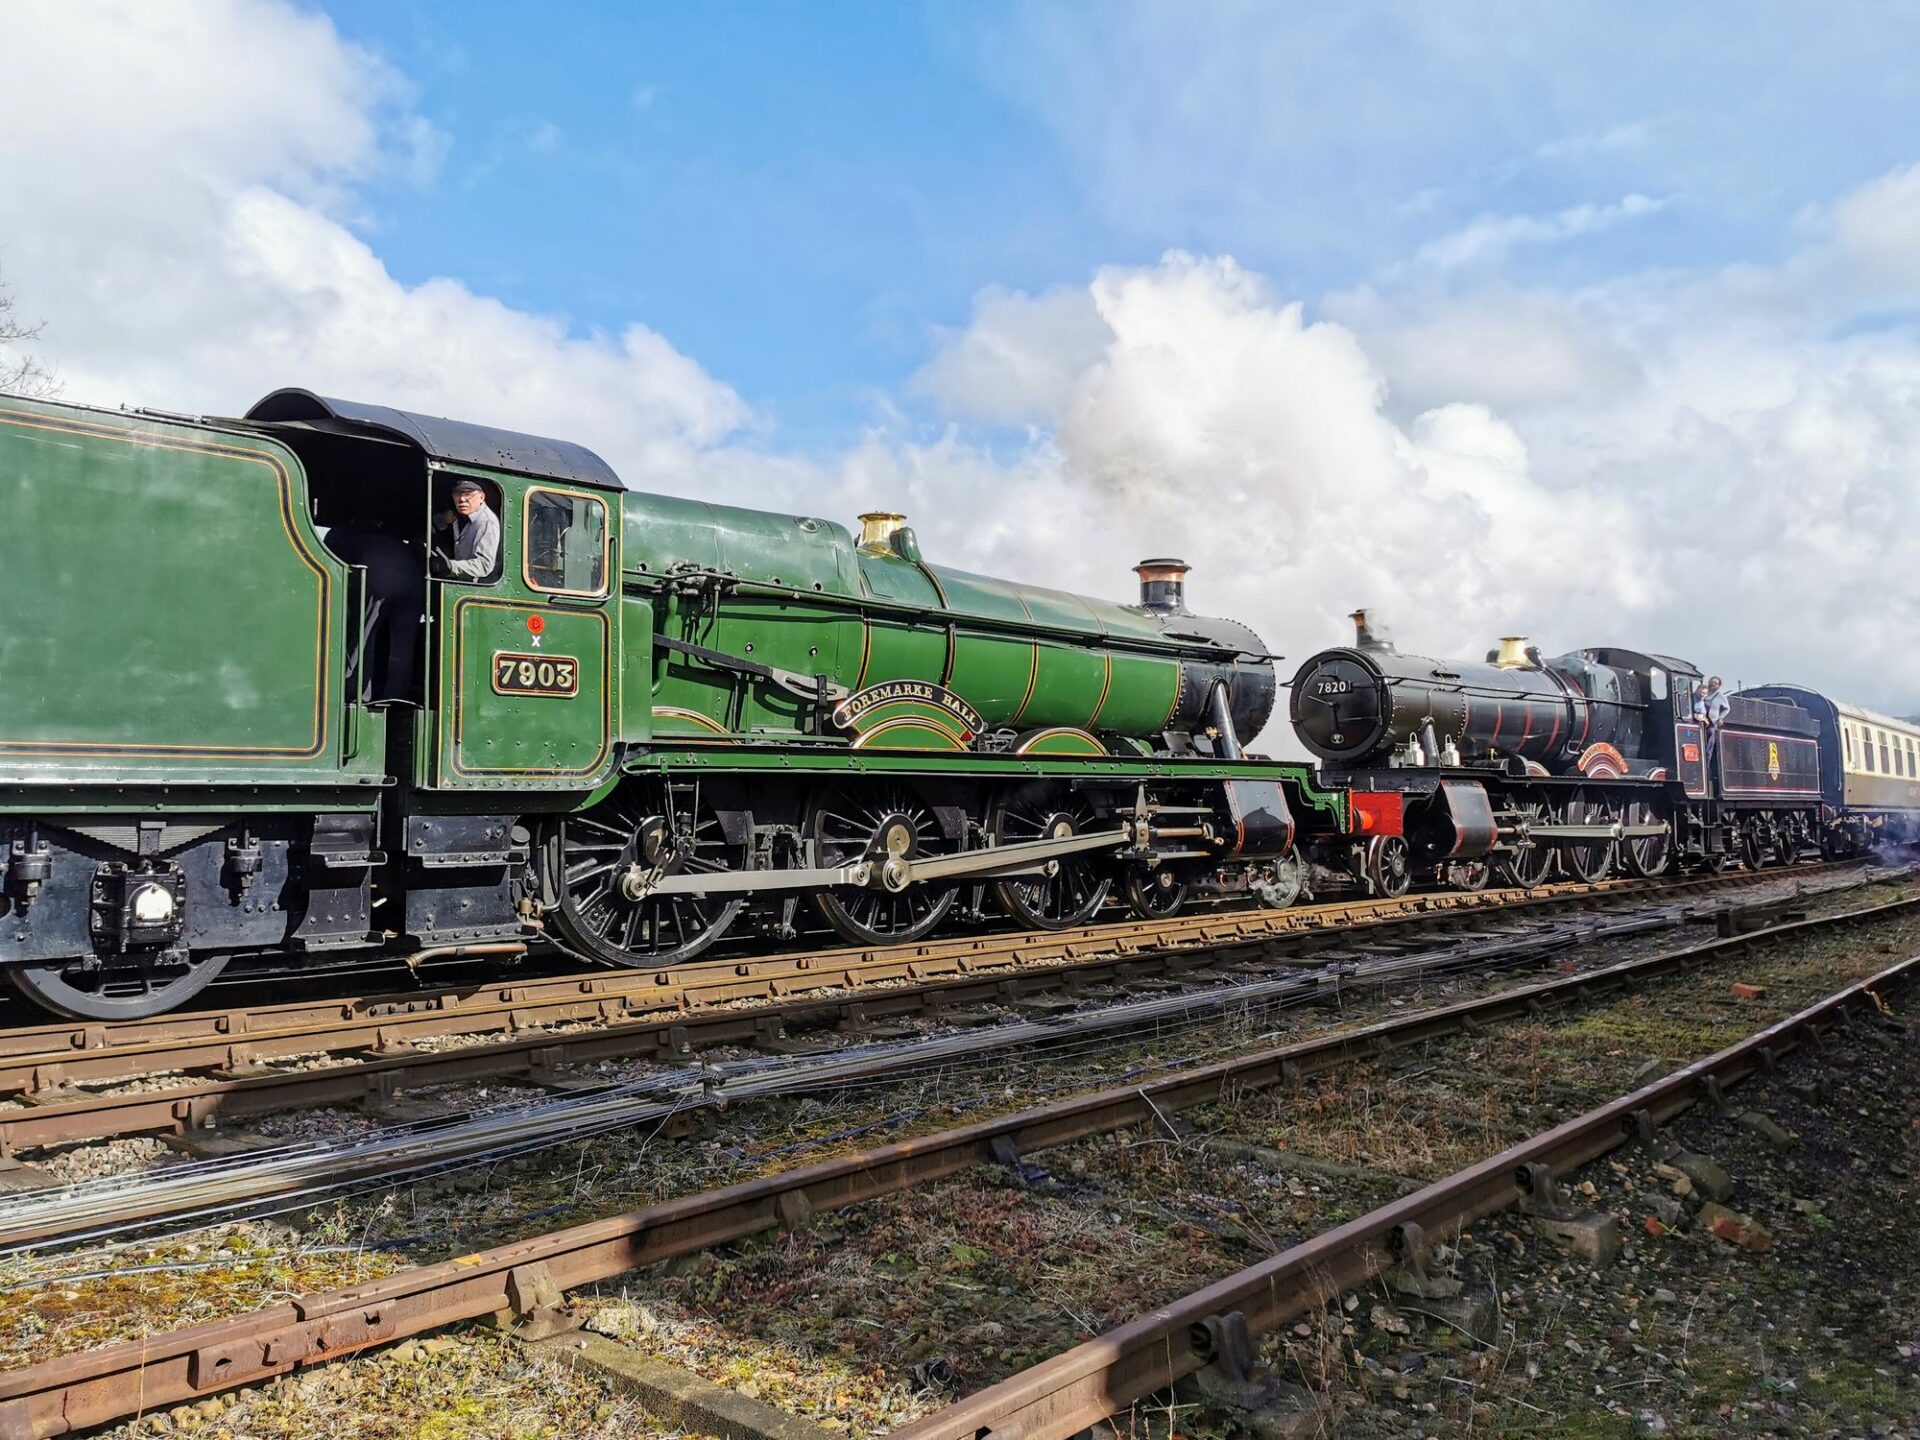 Gloucestershire Warwickshire Steam Railway’s Cotswold Festival of Steam Gala